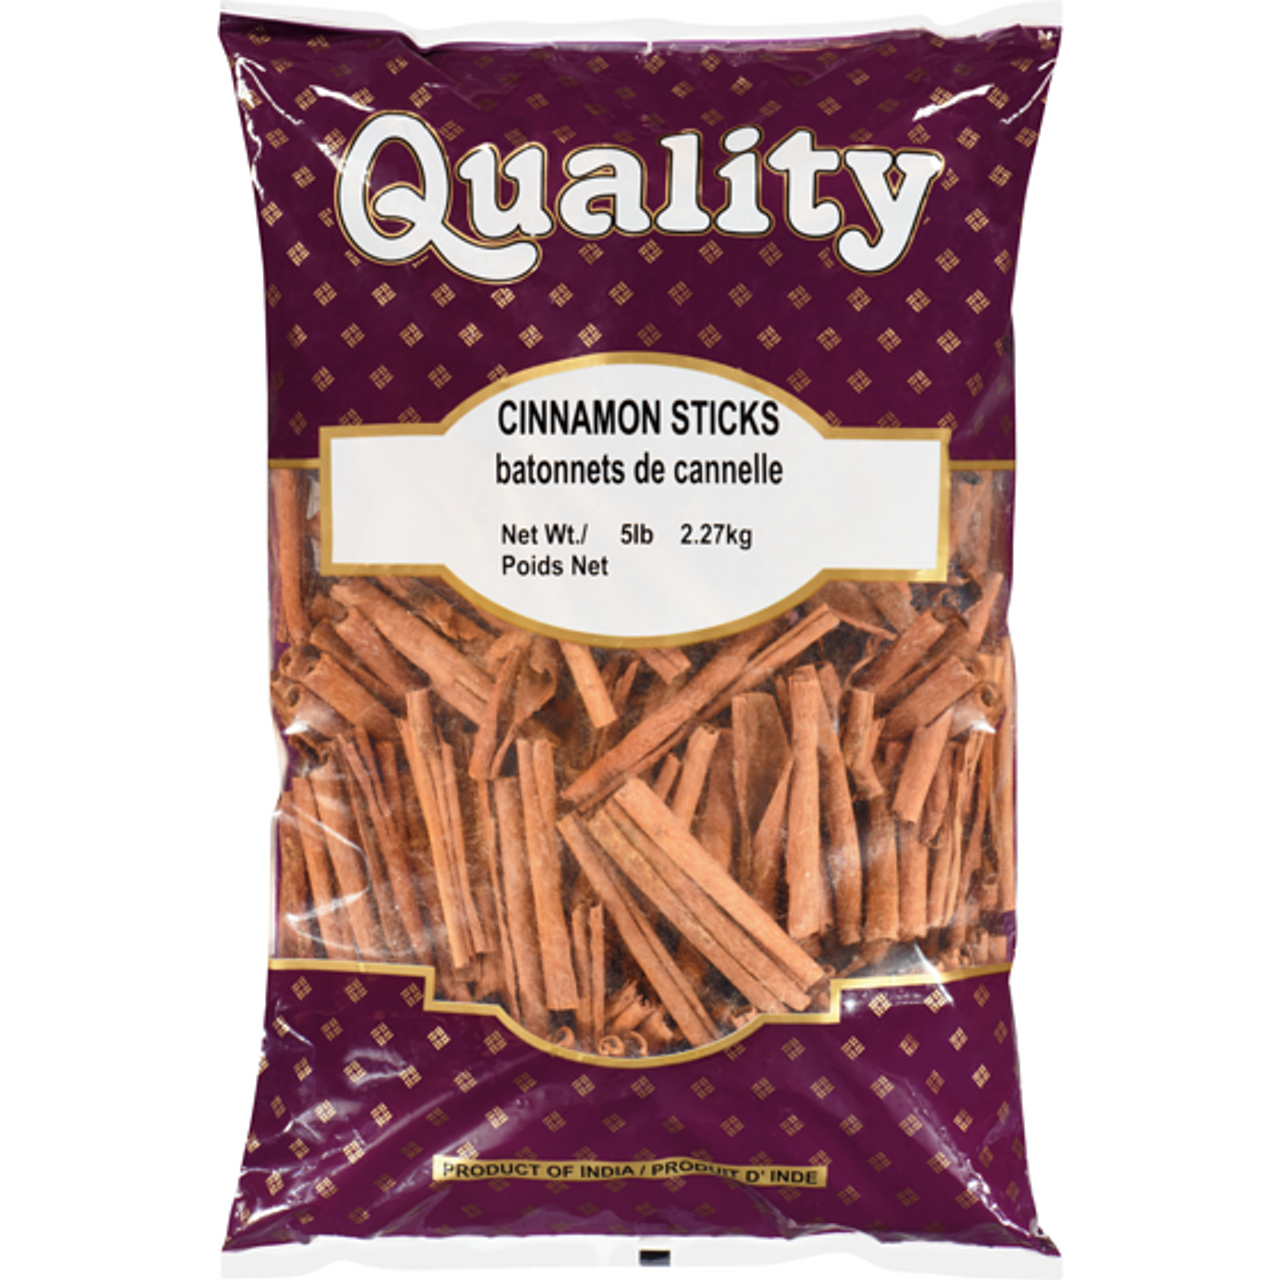 QUALITY Cinnamon Sticks 2.27 kg